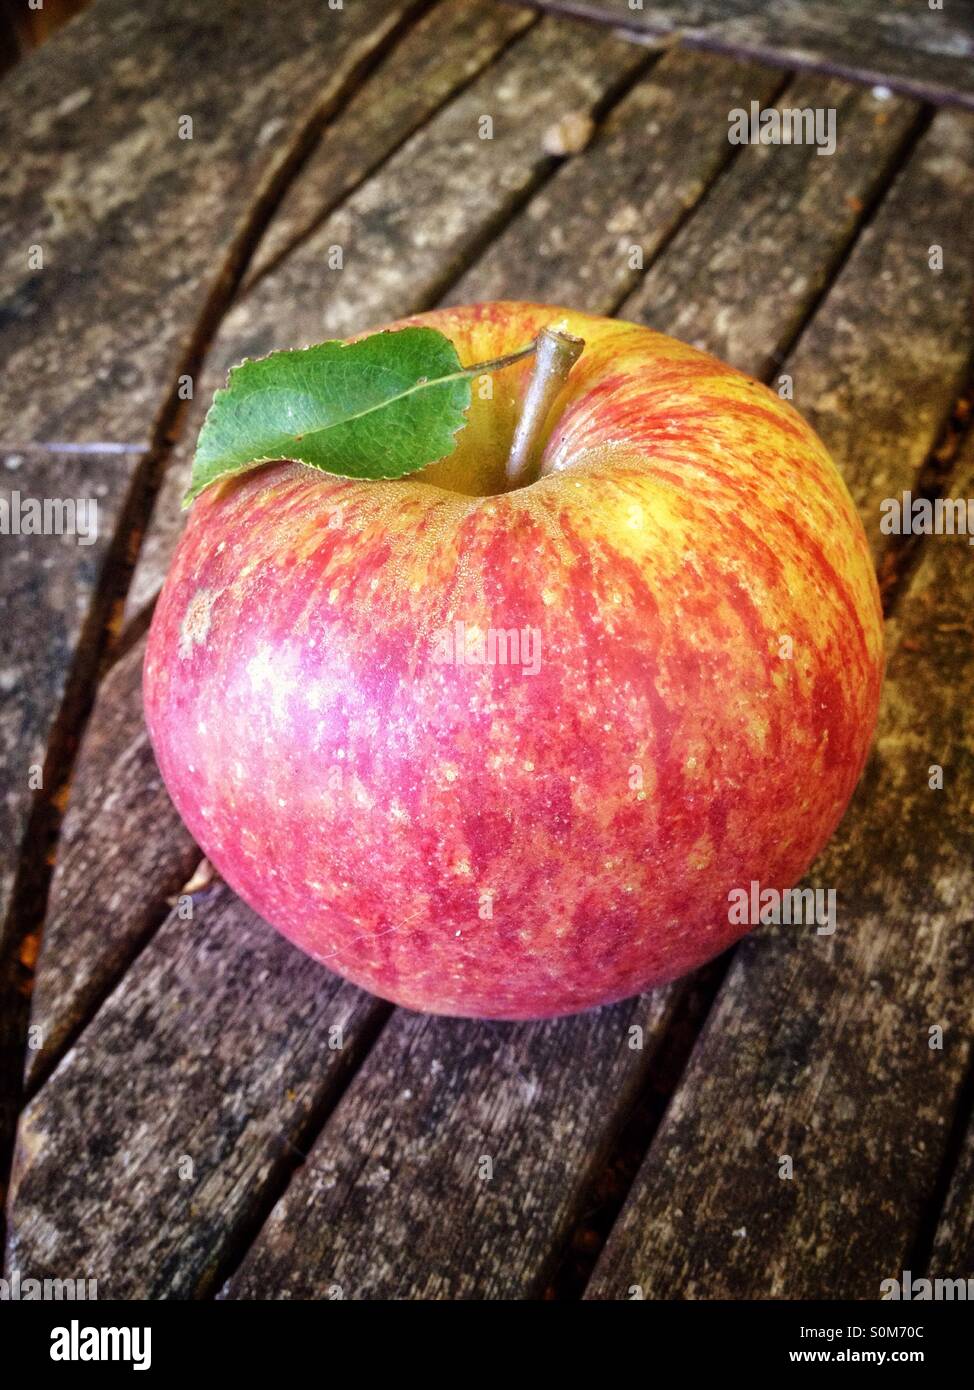 Crunchy apple Stock Photo